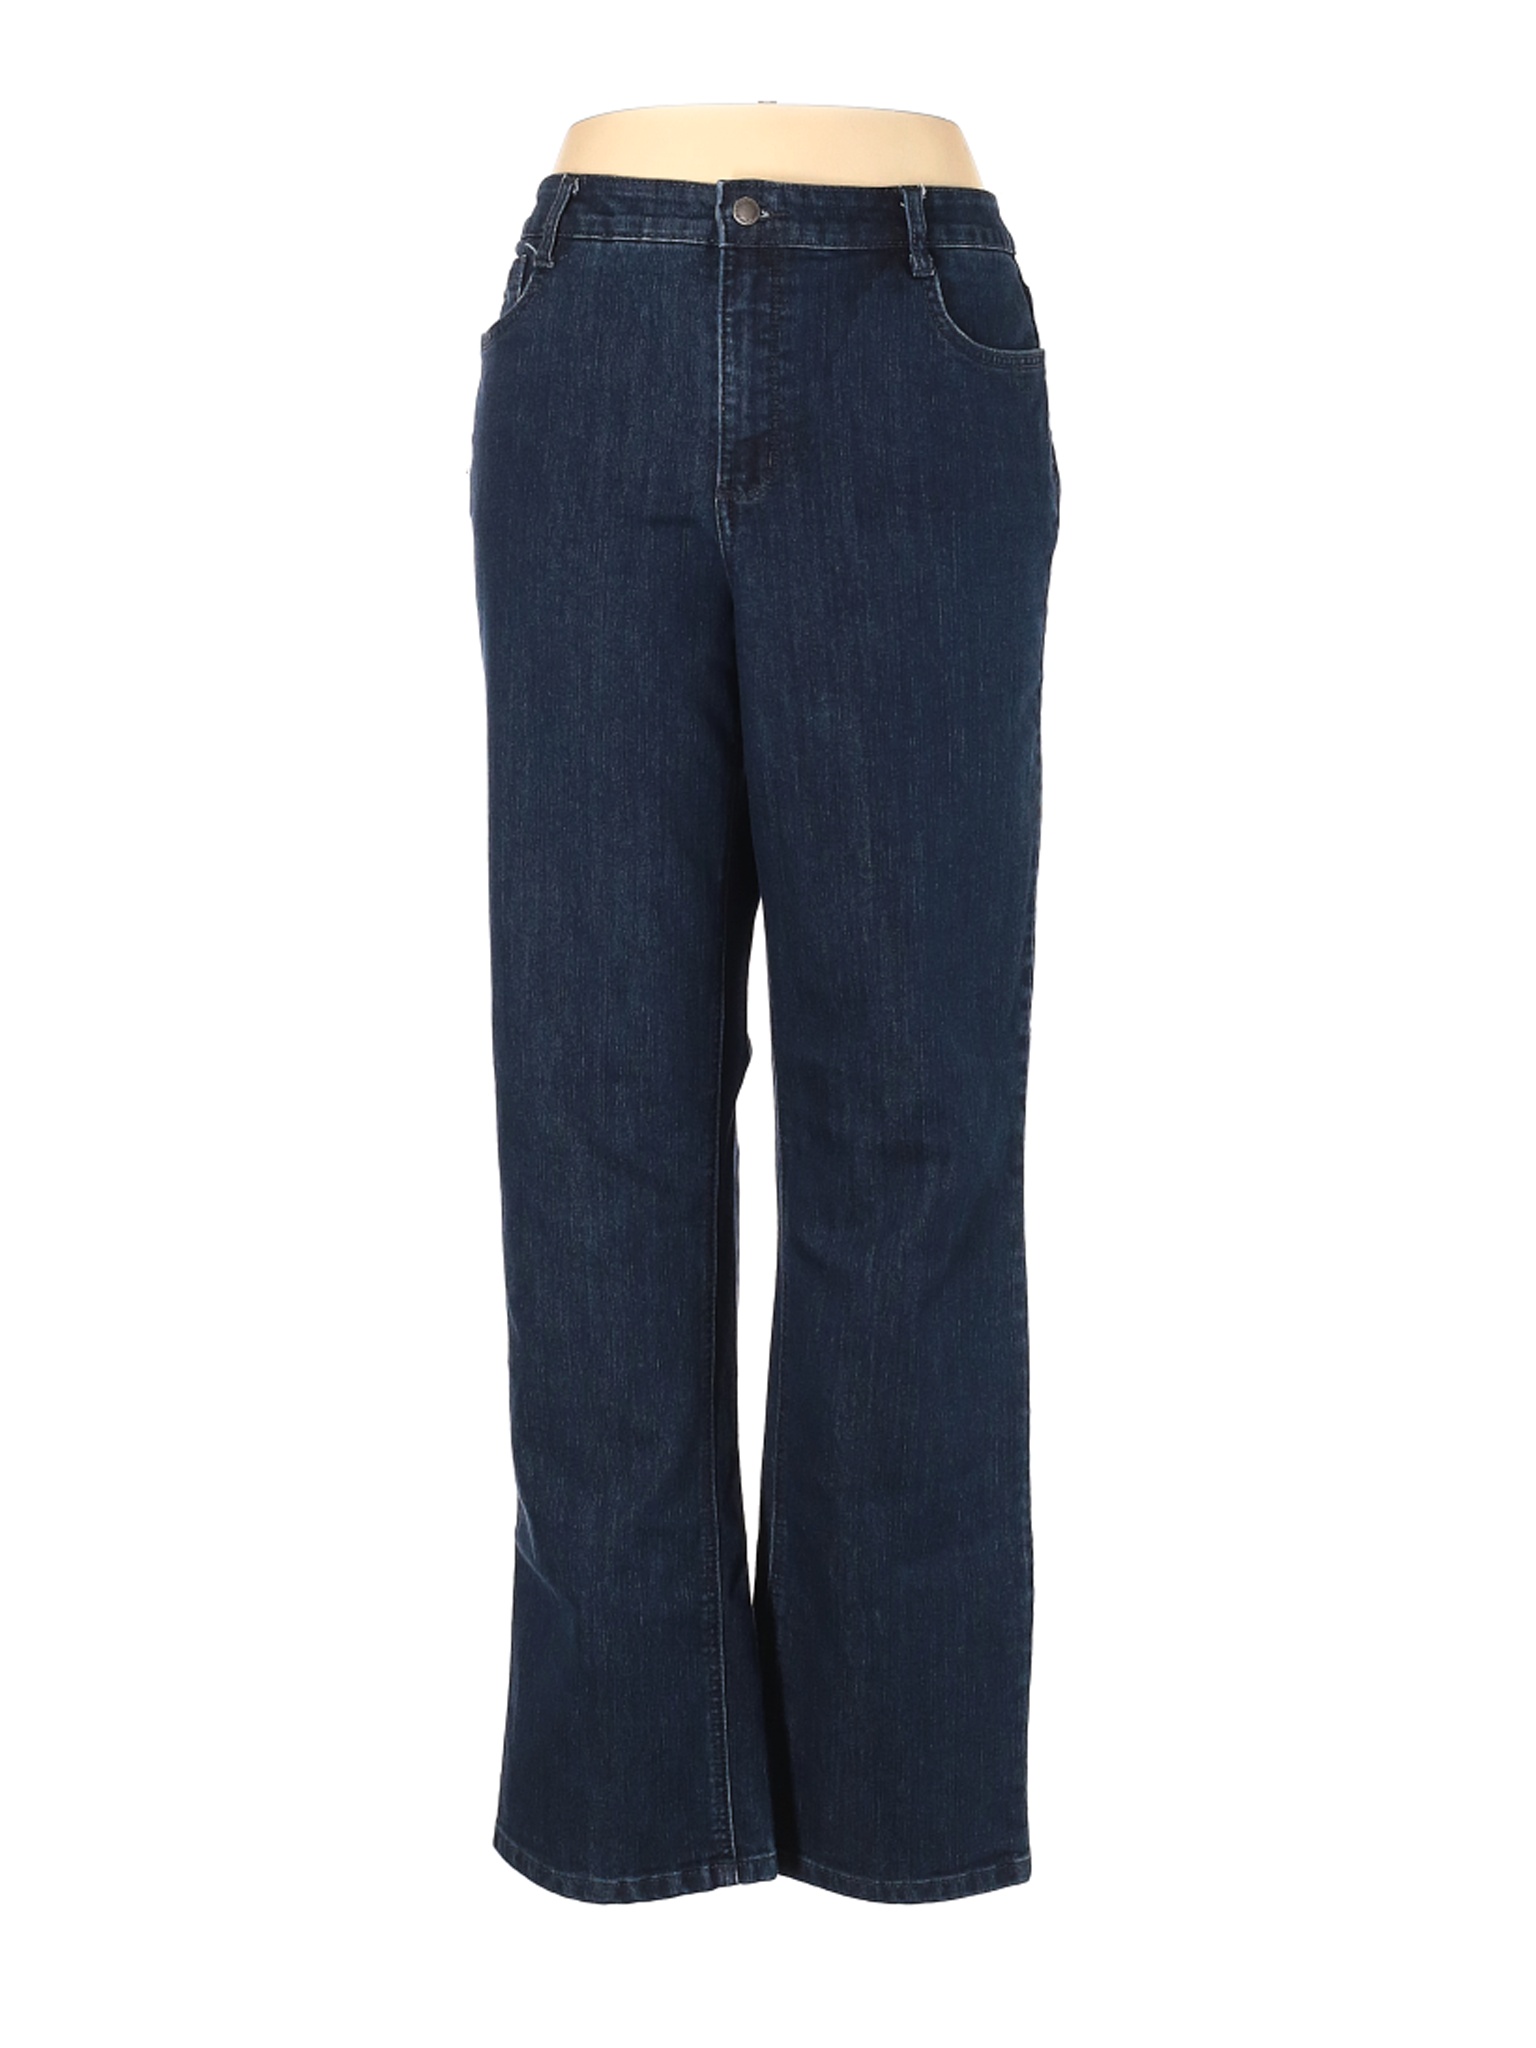 Jones New York Women Blue Jeans 16 | eBay